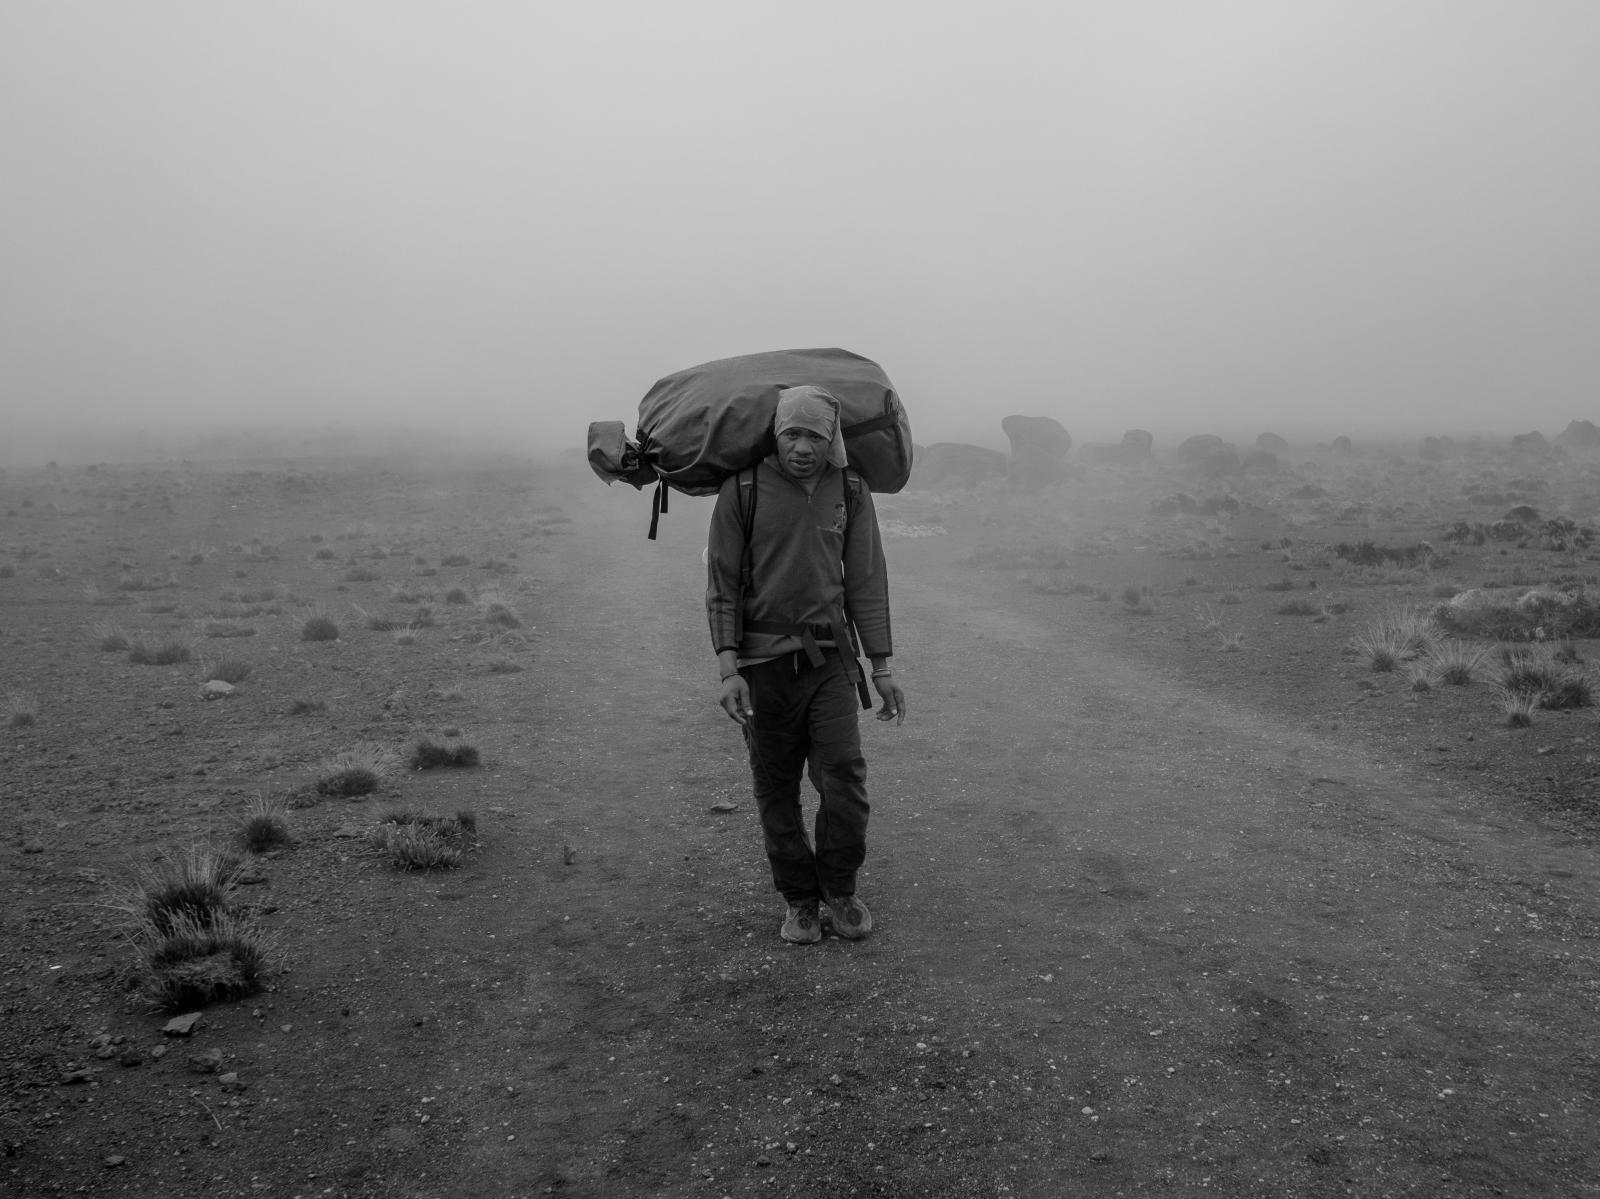 The Porters of Kilimanjaro | Buy this image